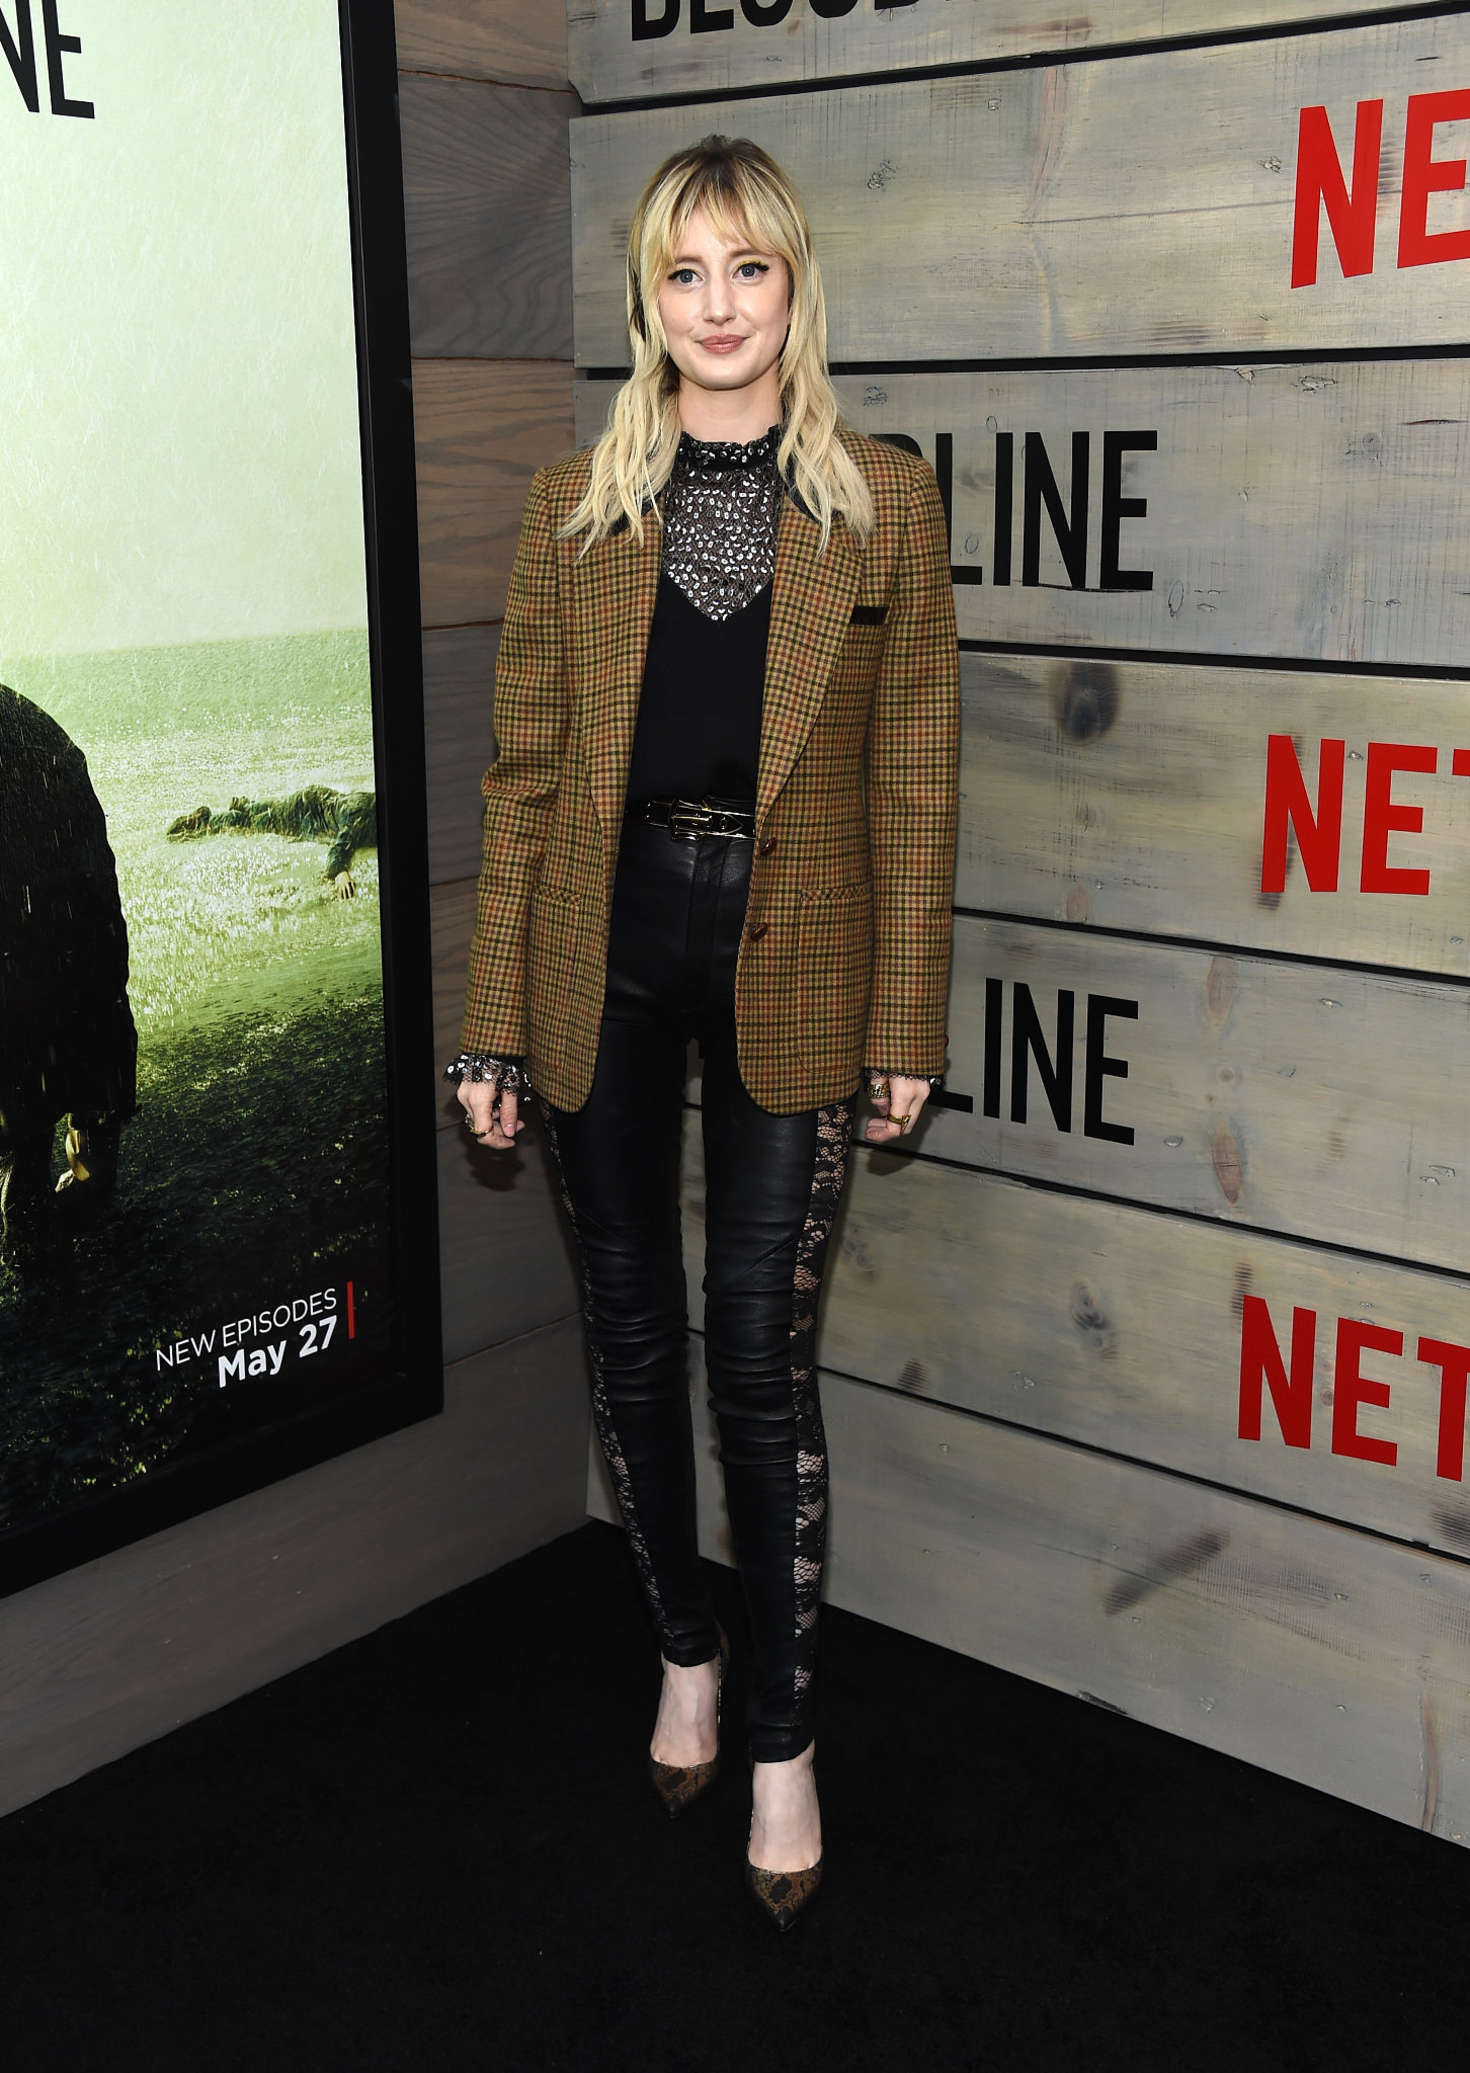 Andrea Riseborough attends the Bloodline premiere